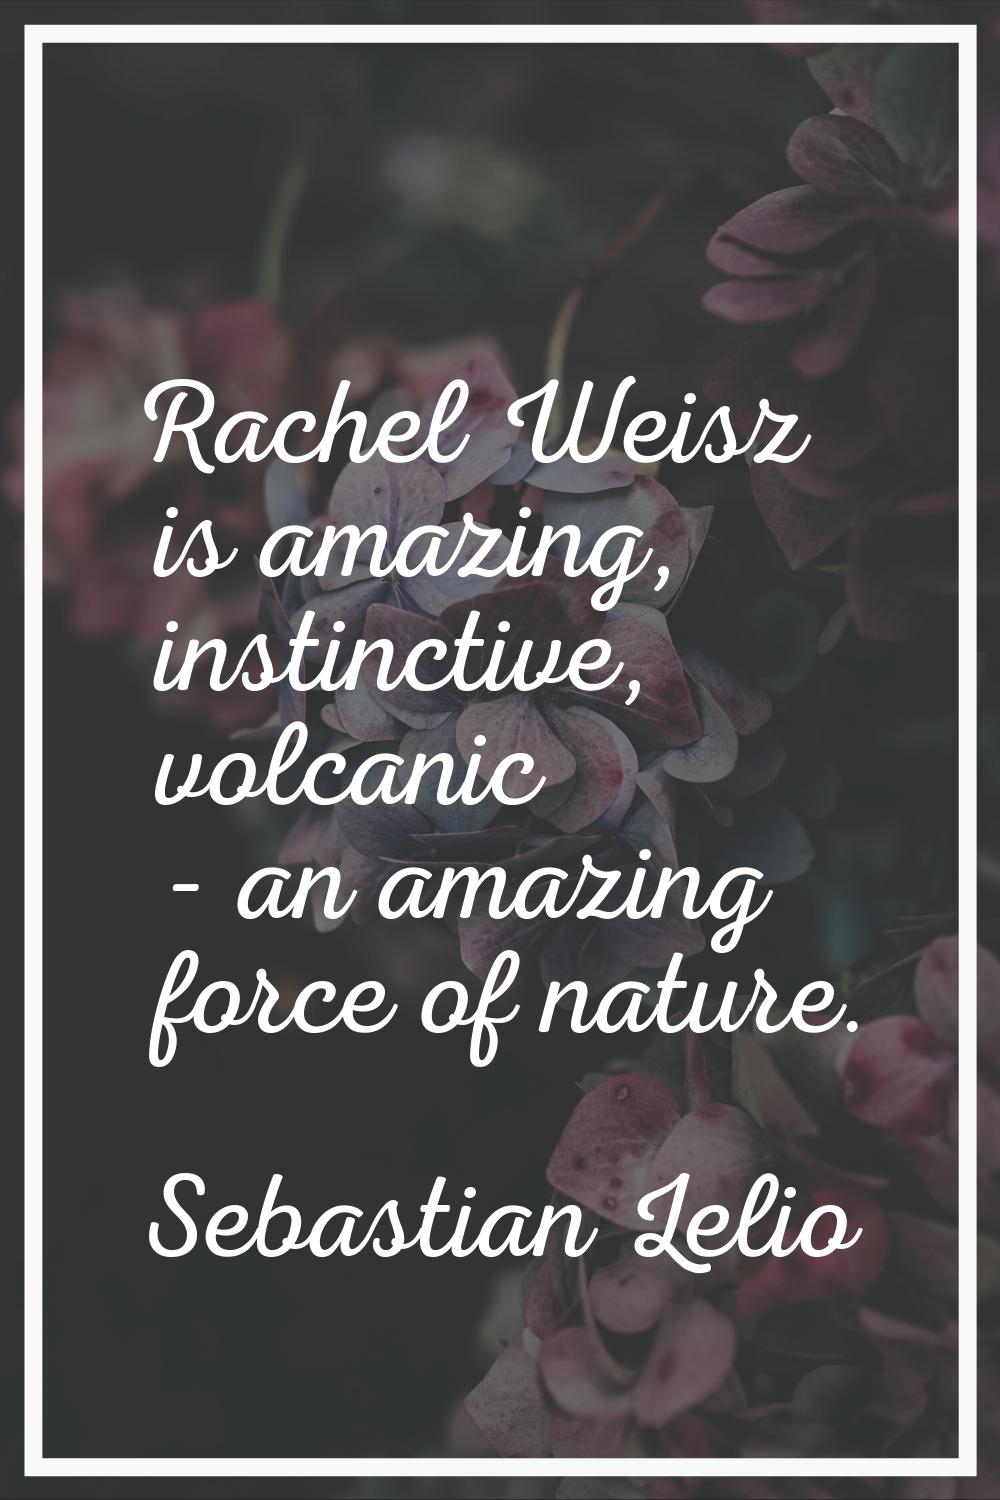 Rachel Weisz is amazing, instinctive, volcanic - an amazing force of nature.